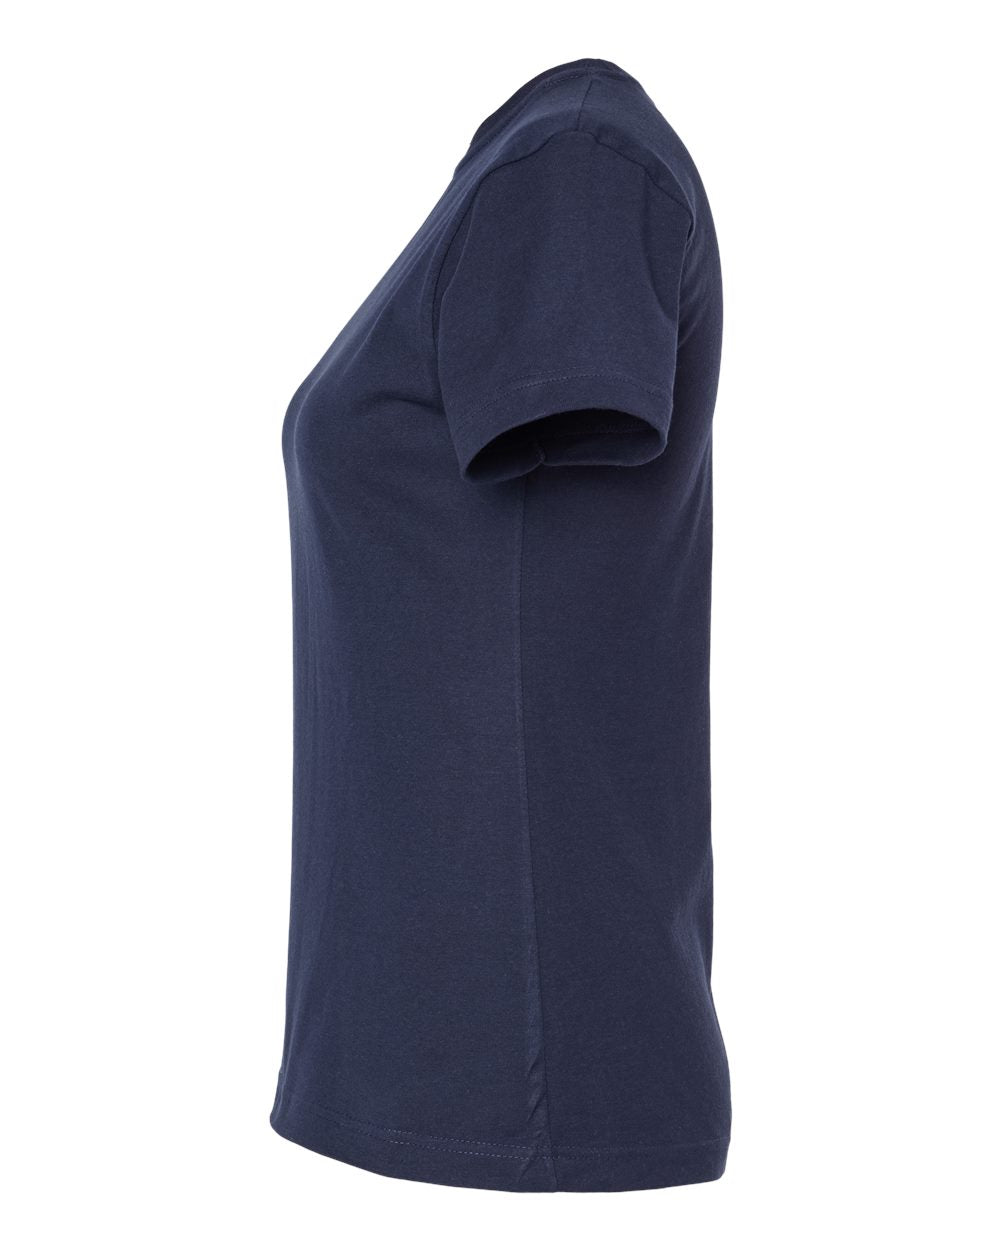 Tultex - Women's Fine Jersey Classic Fit T-Shirt - 216